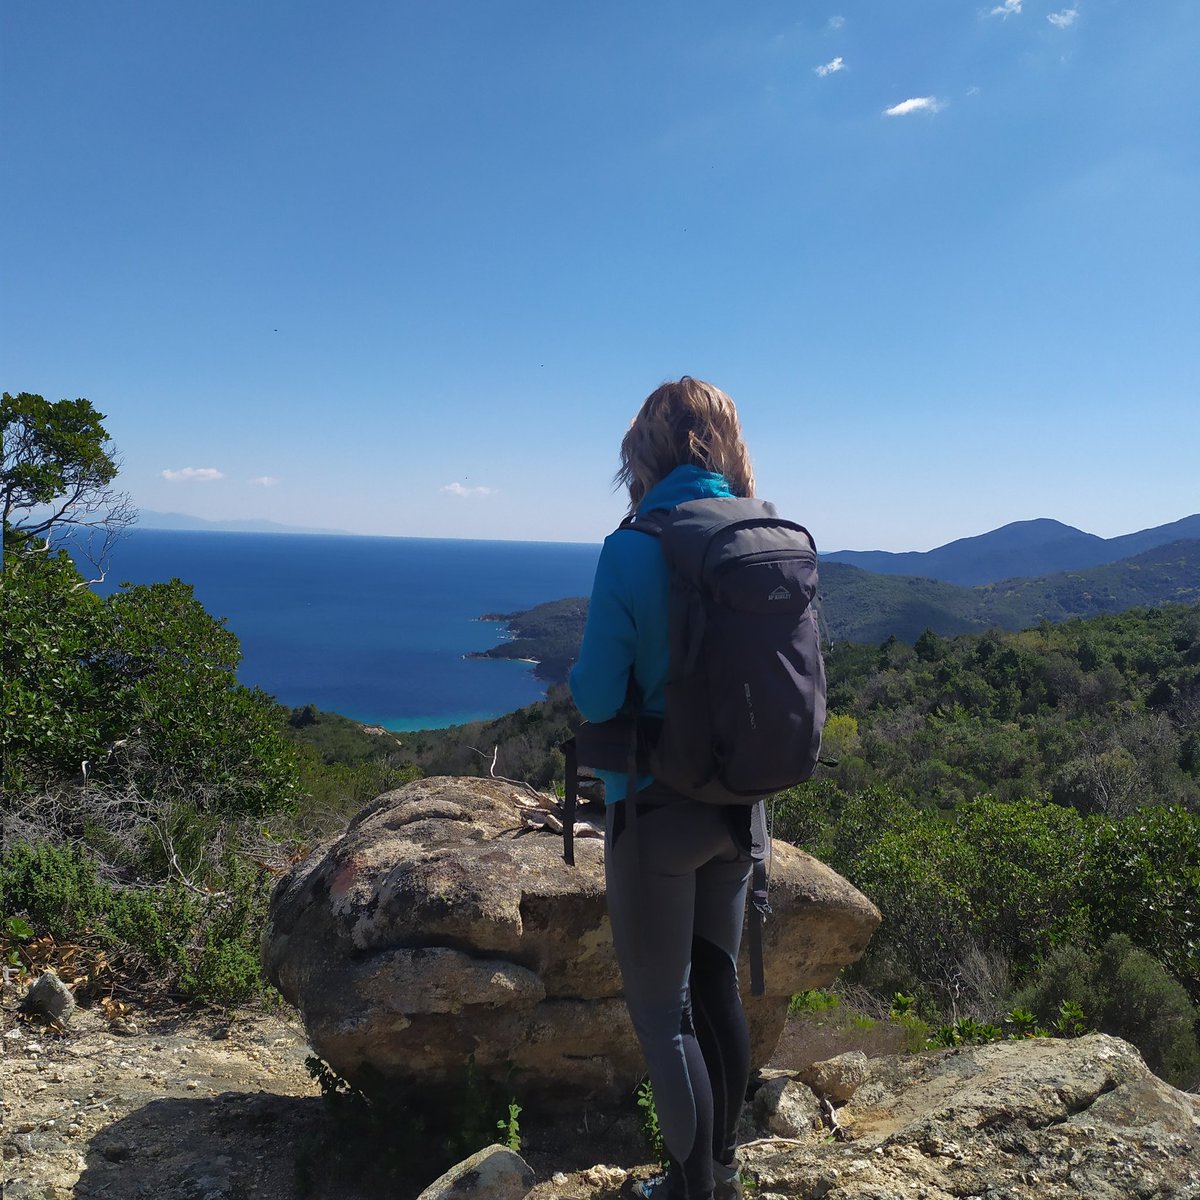 #traceyoureco #hikingadventures #hiking #outdoors #activities #NaturePhotography #mountains #sea #xalkidiki  #stagira #Discovery #WomensWorlds #traveltours #visitgreece #Greece #life #travephotographi #fridaymorning #